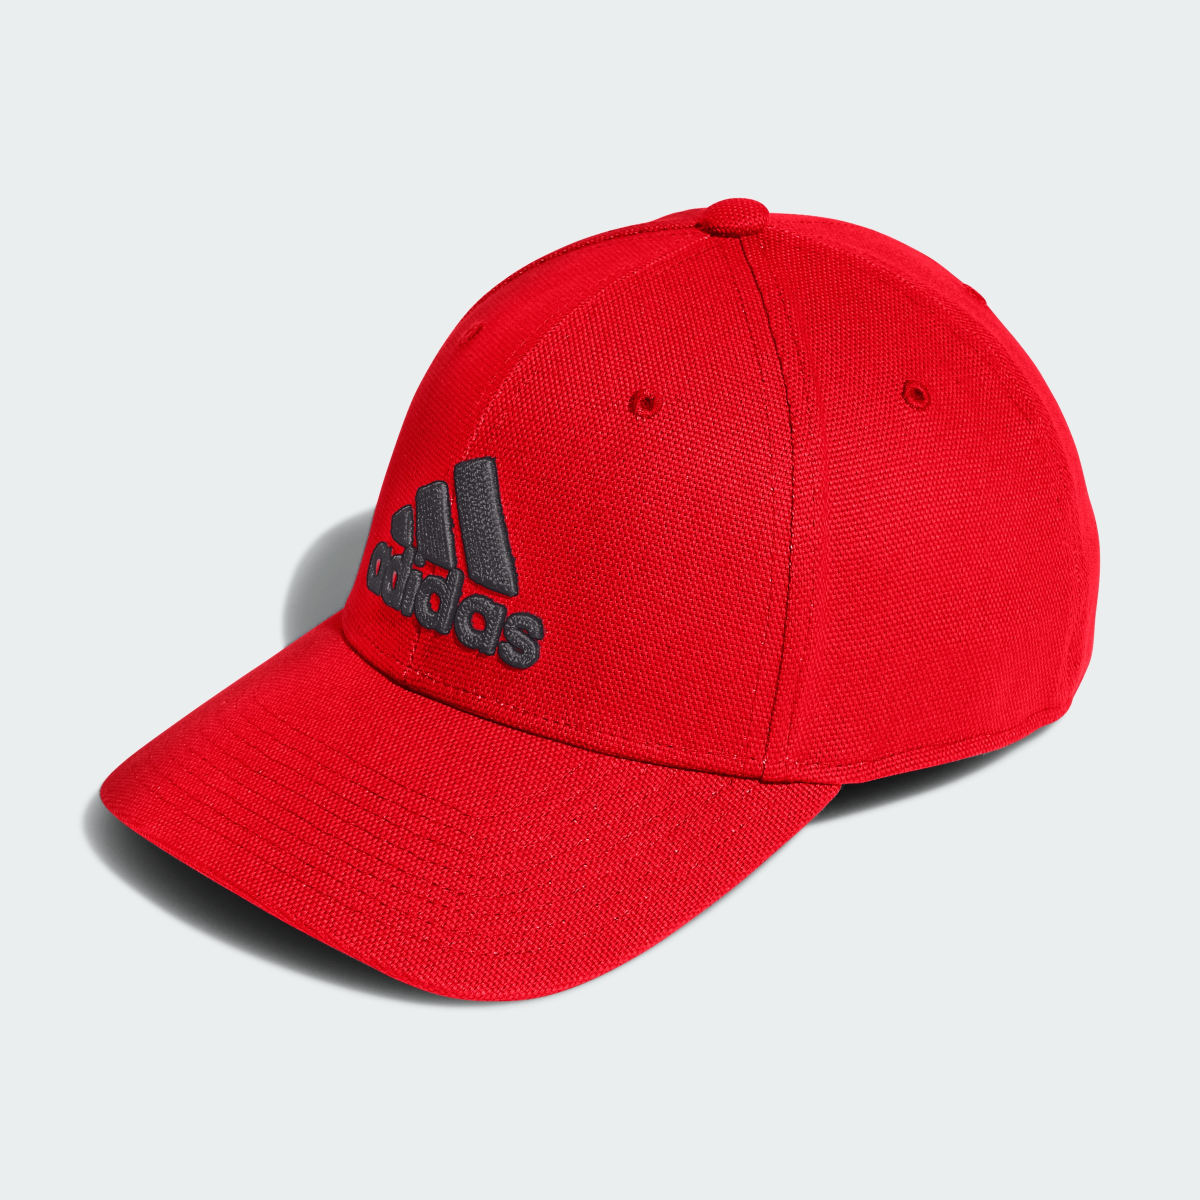 Adidas Producer Stretch Fit Hat. 4